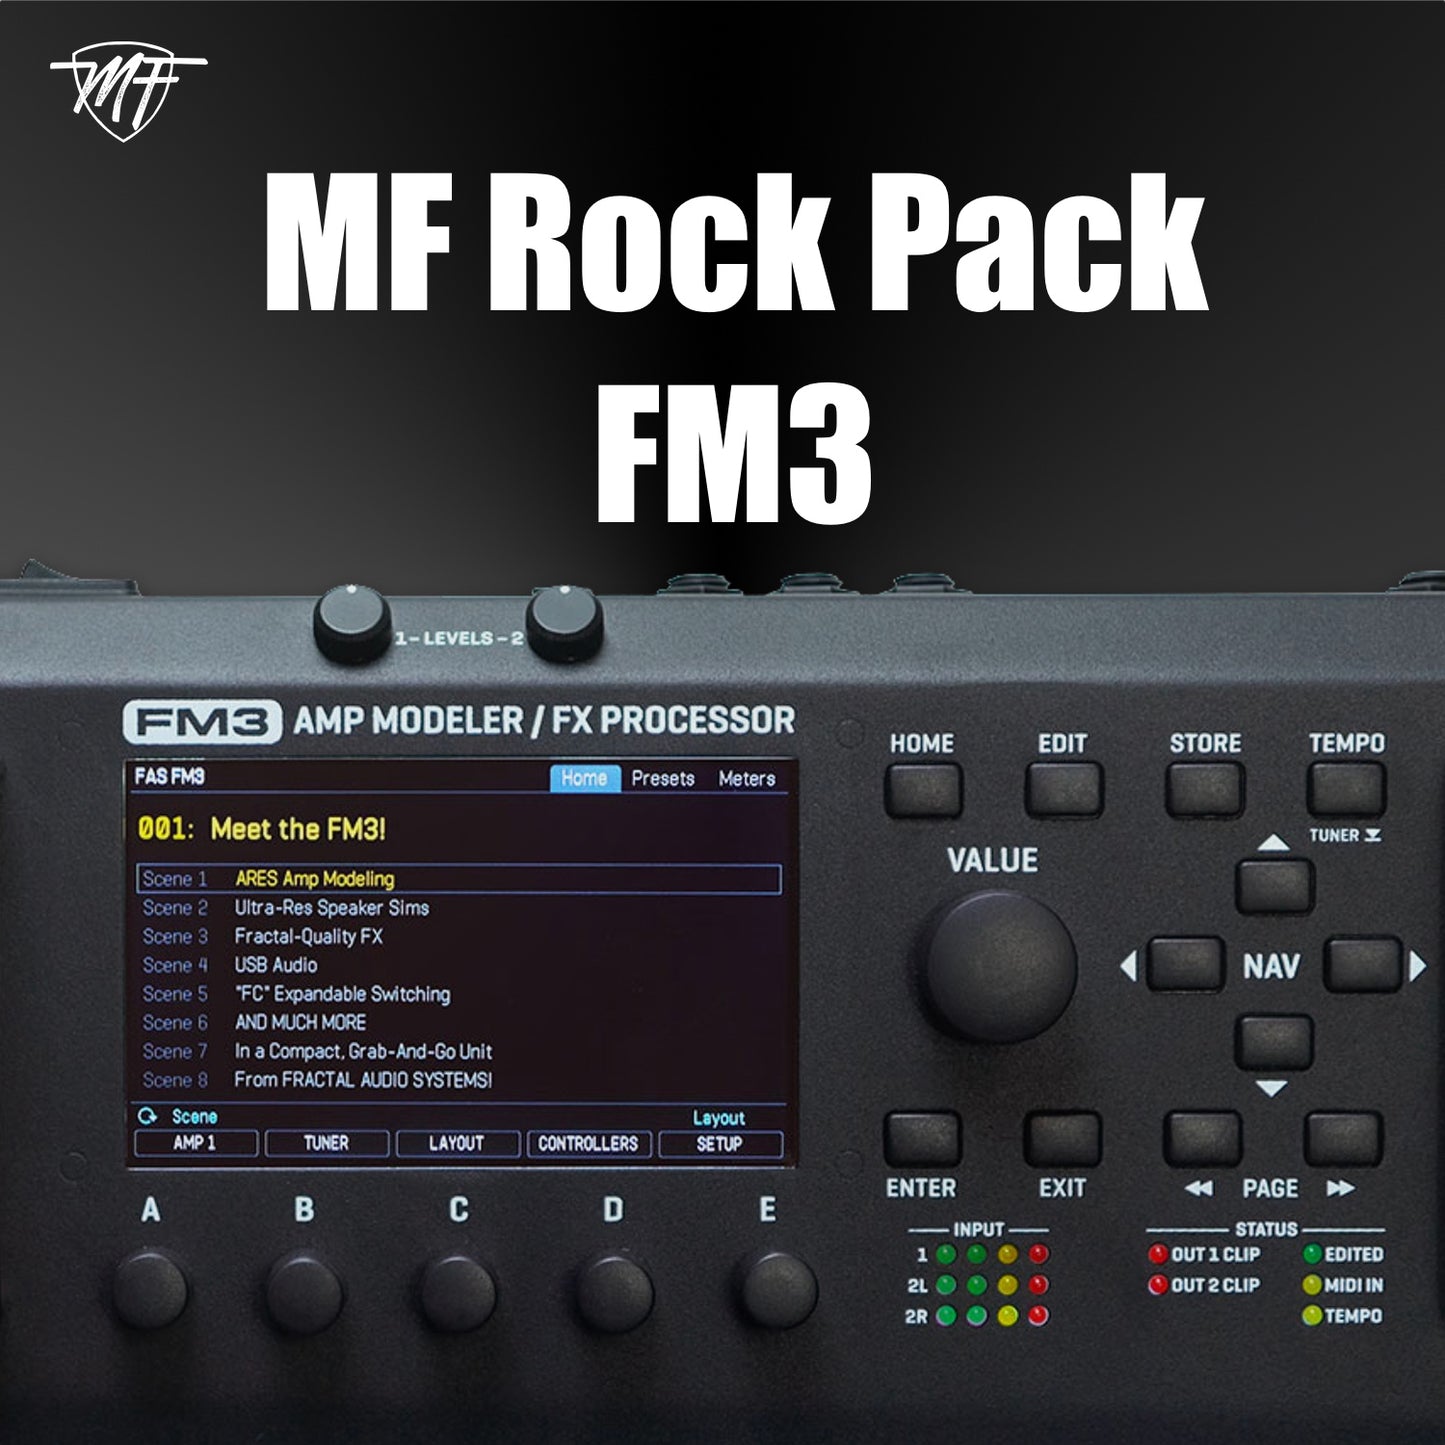 MF Rock Pack FM3